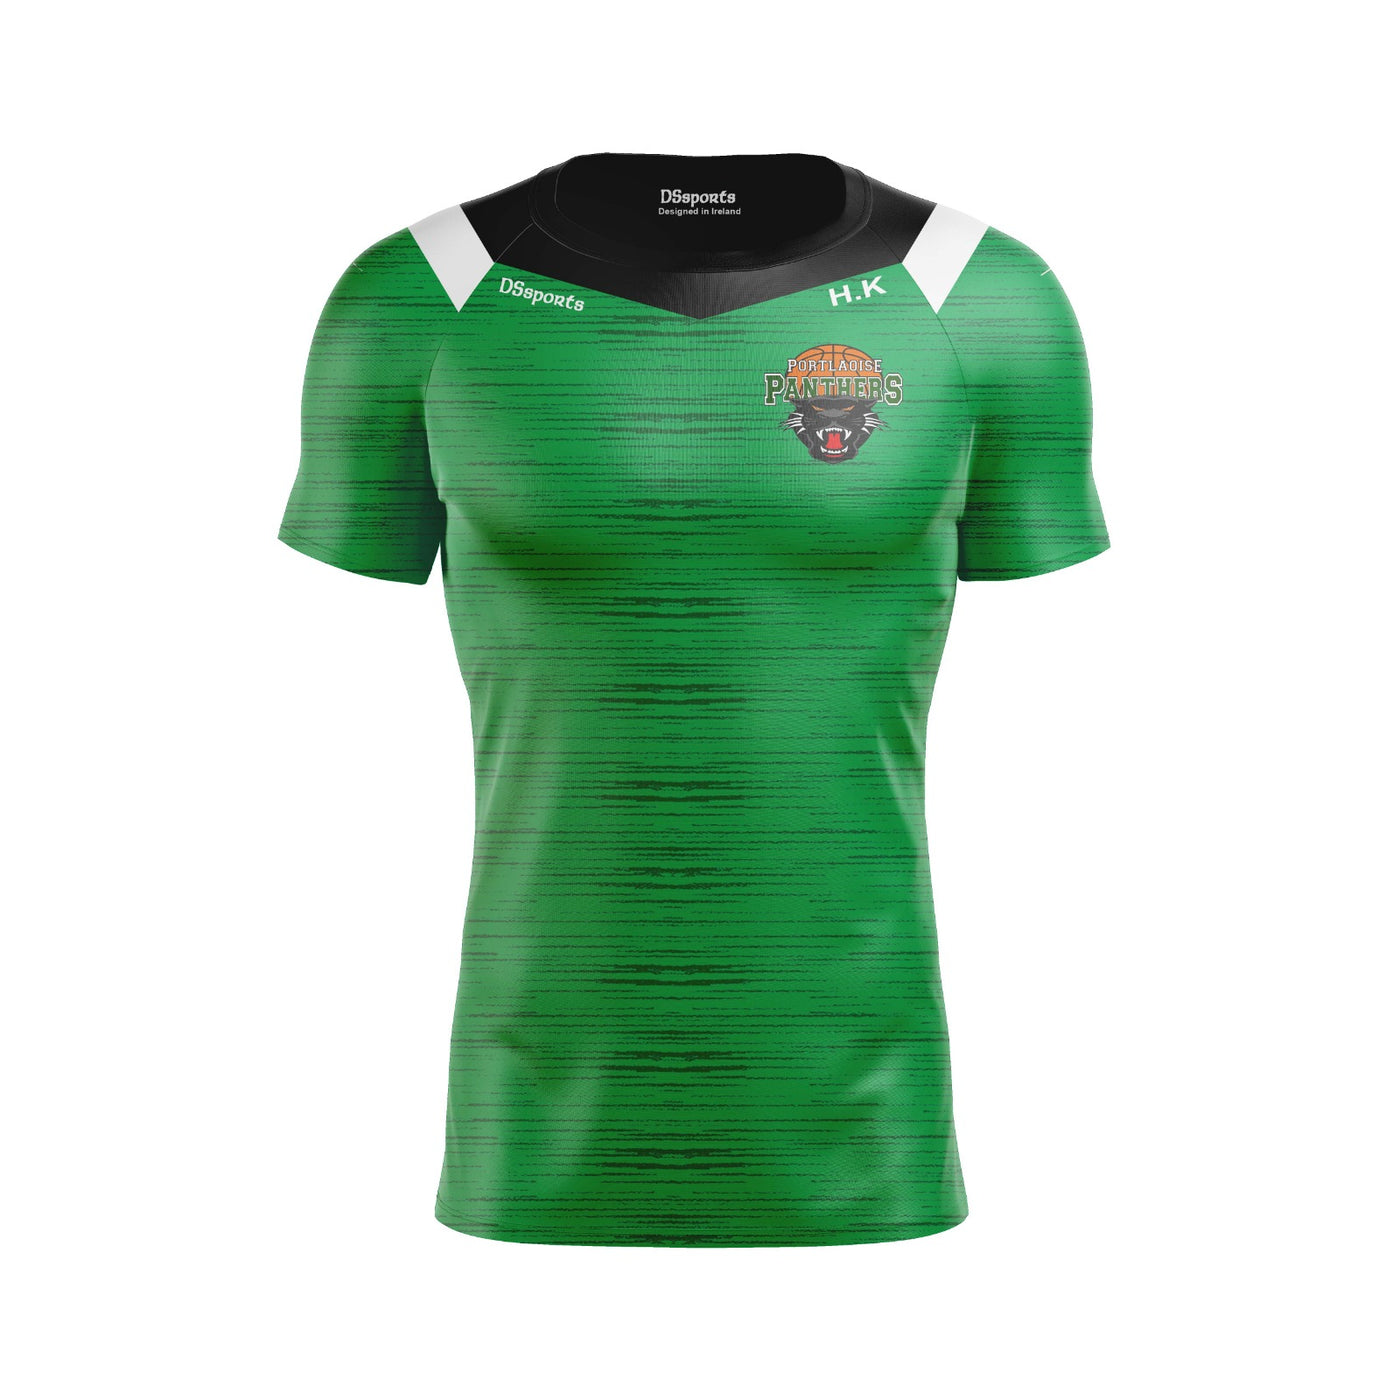 Portlaoise Panthers - T-Shirt